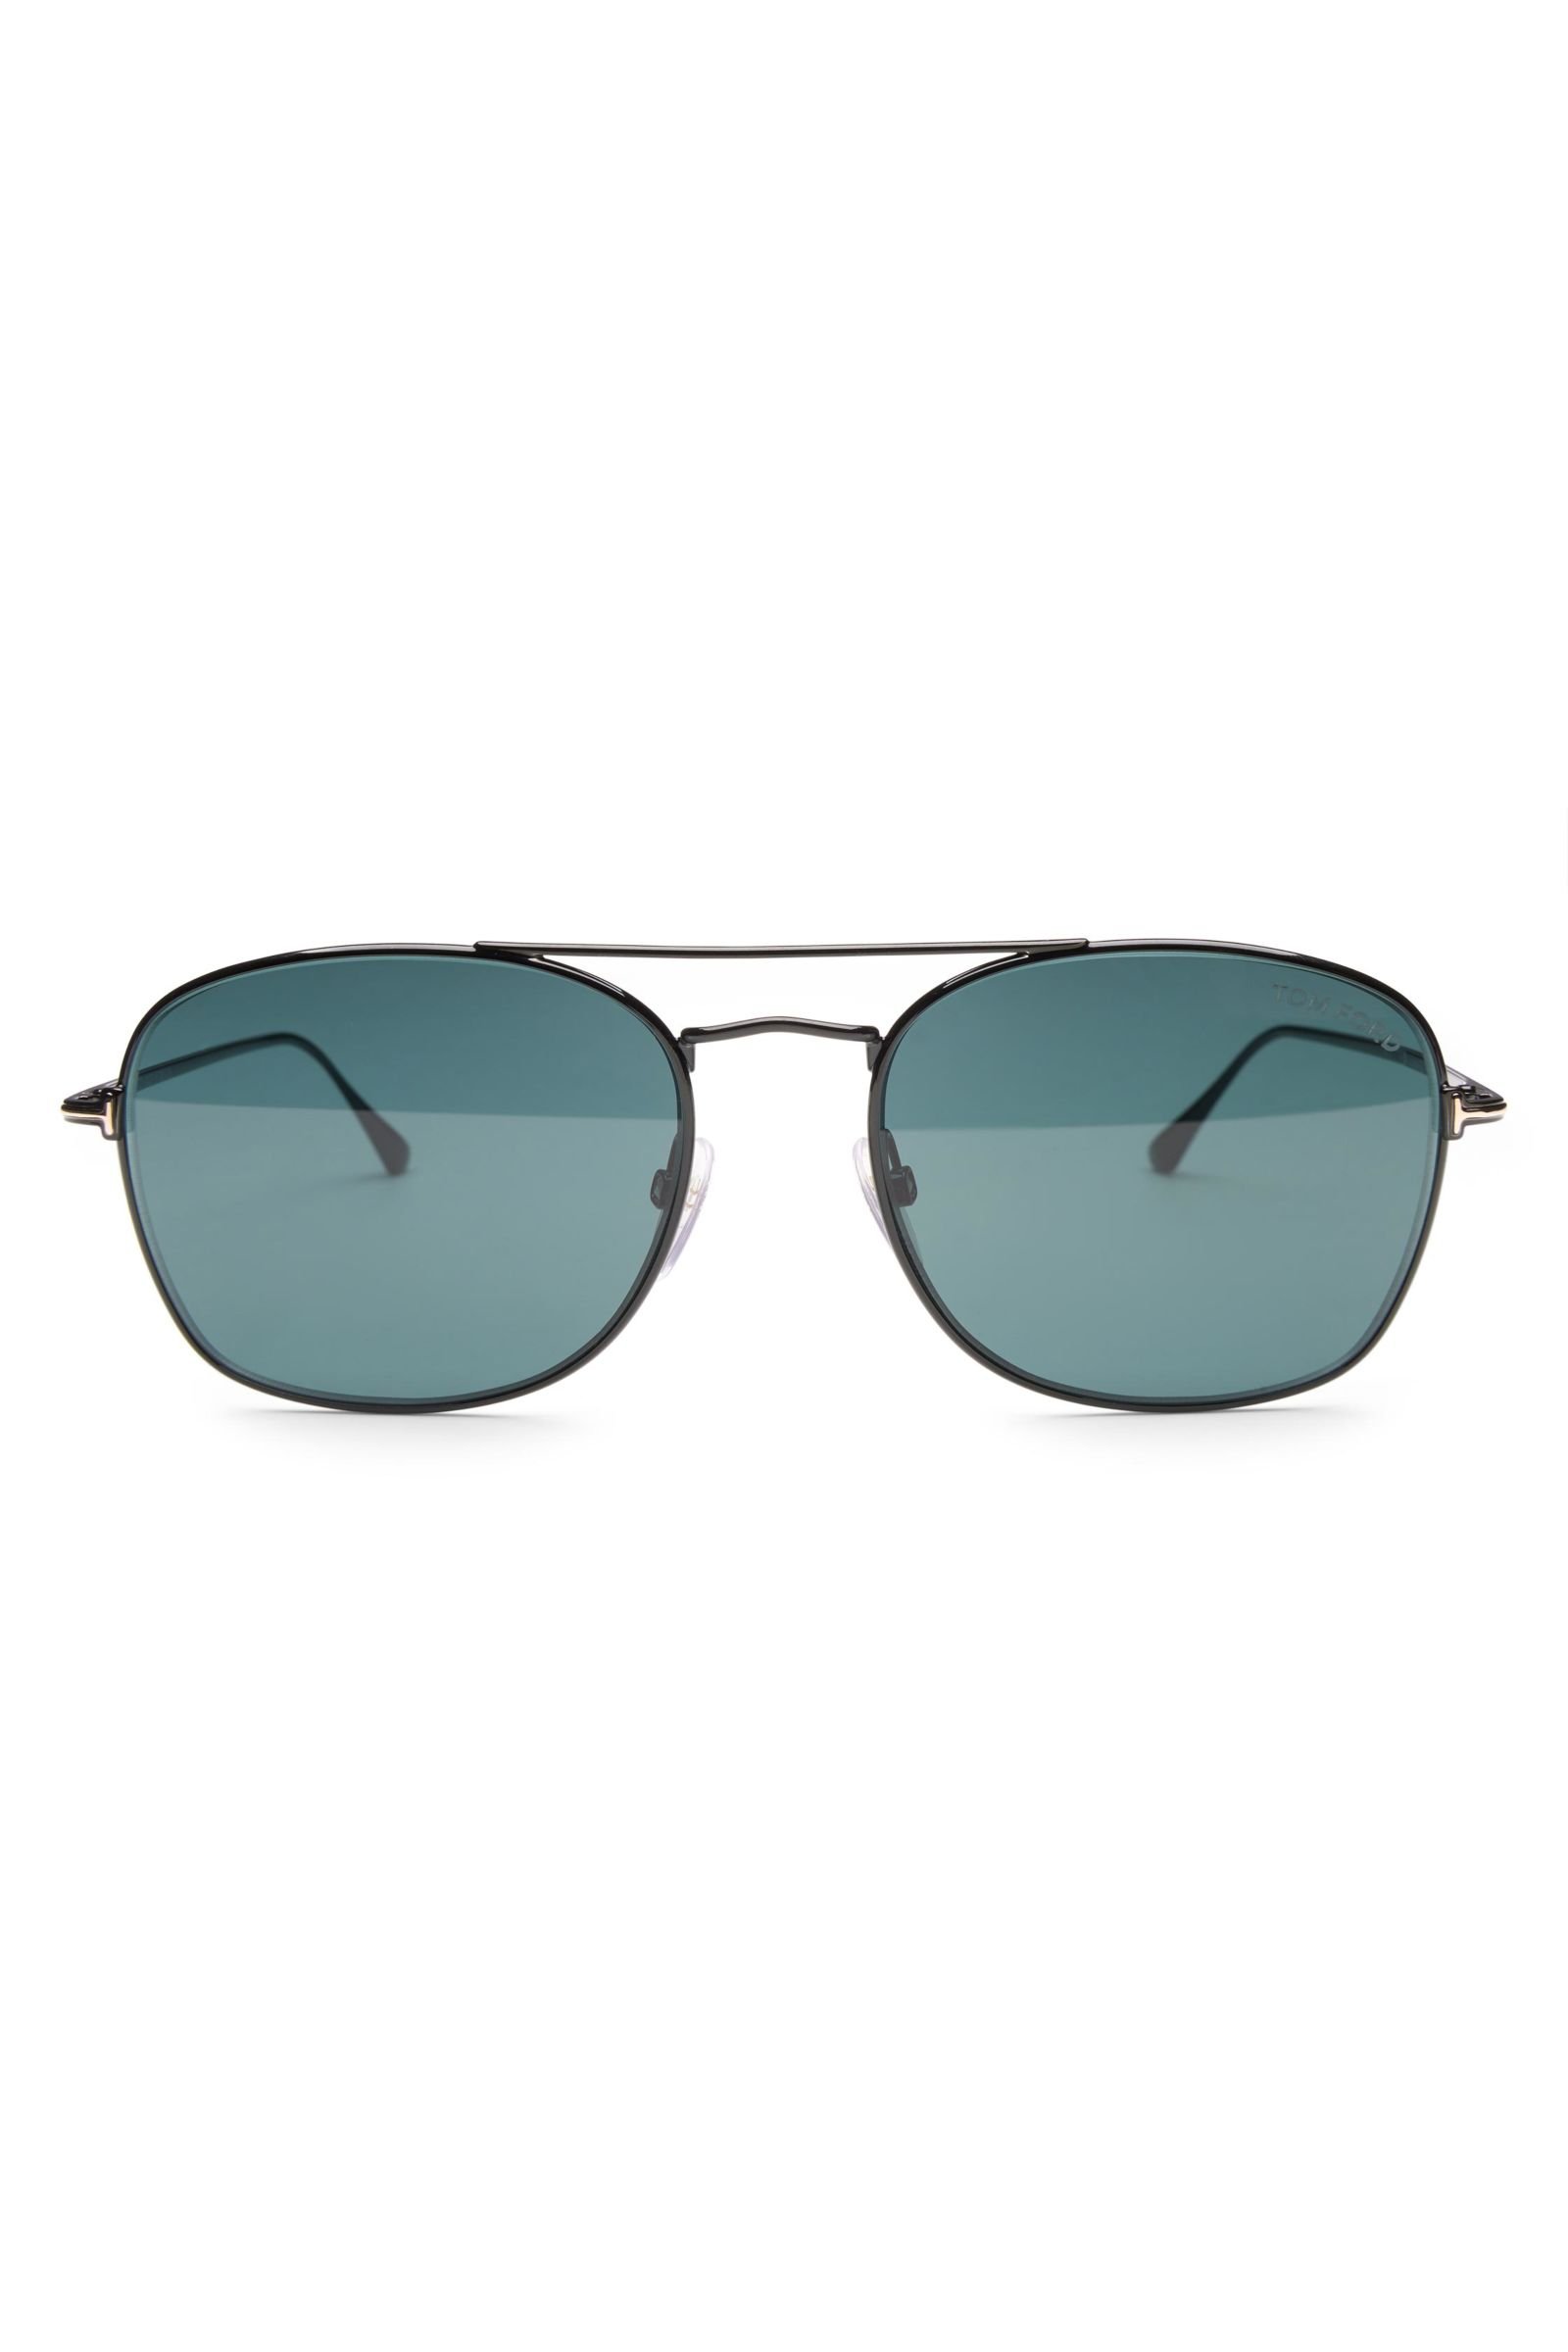 Sunglasses 'Luca' black/green